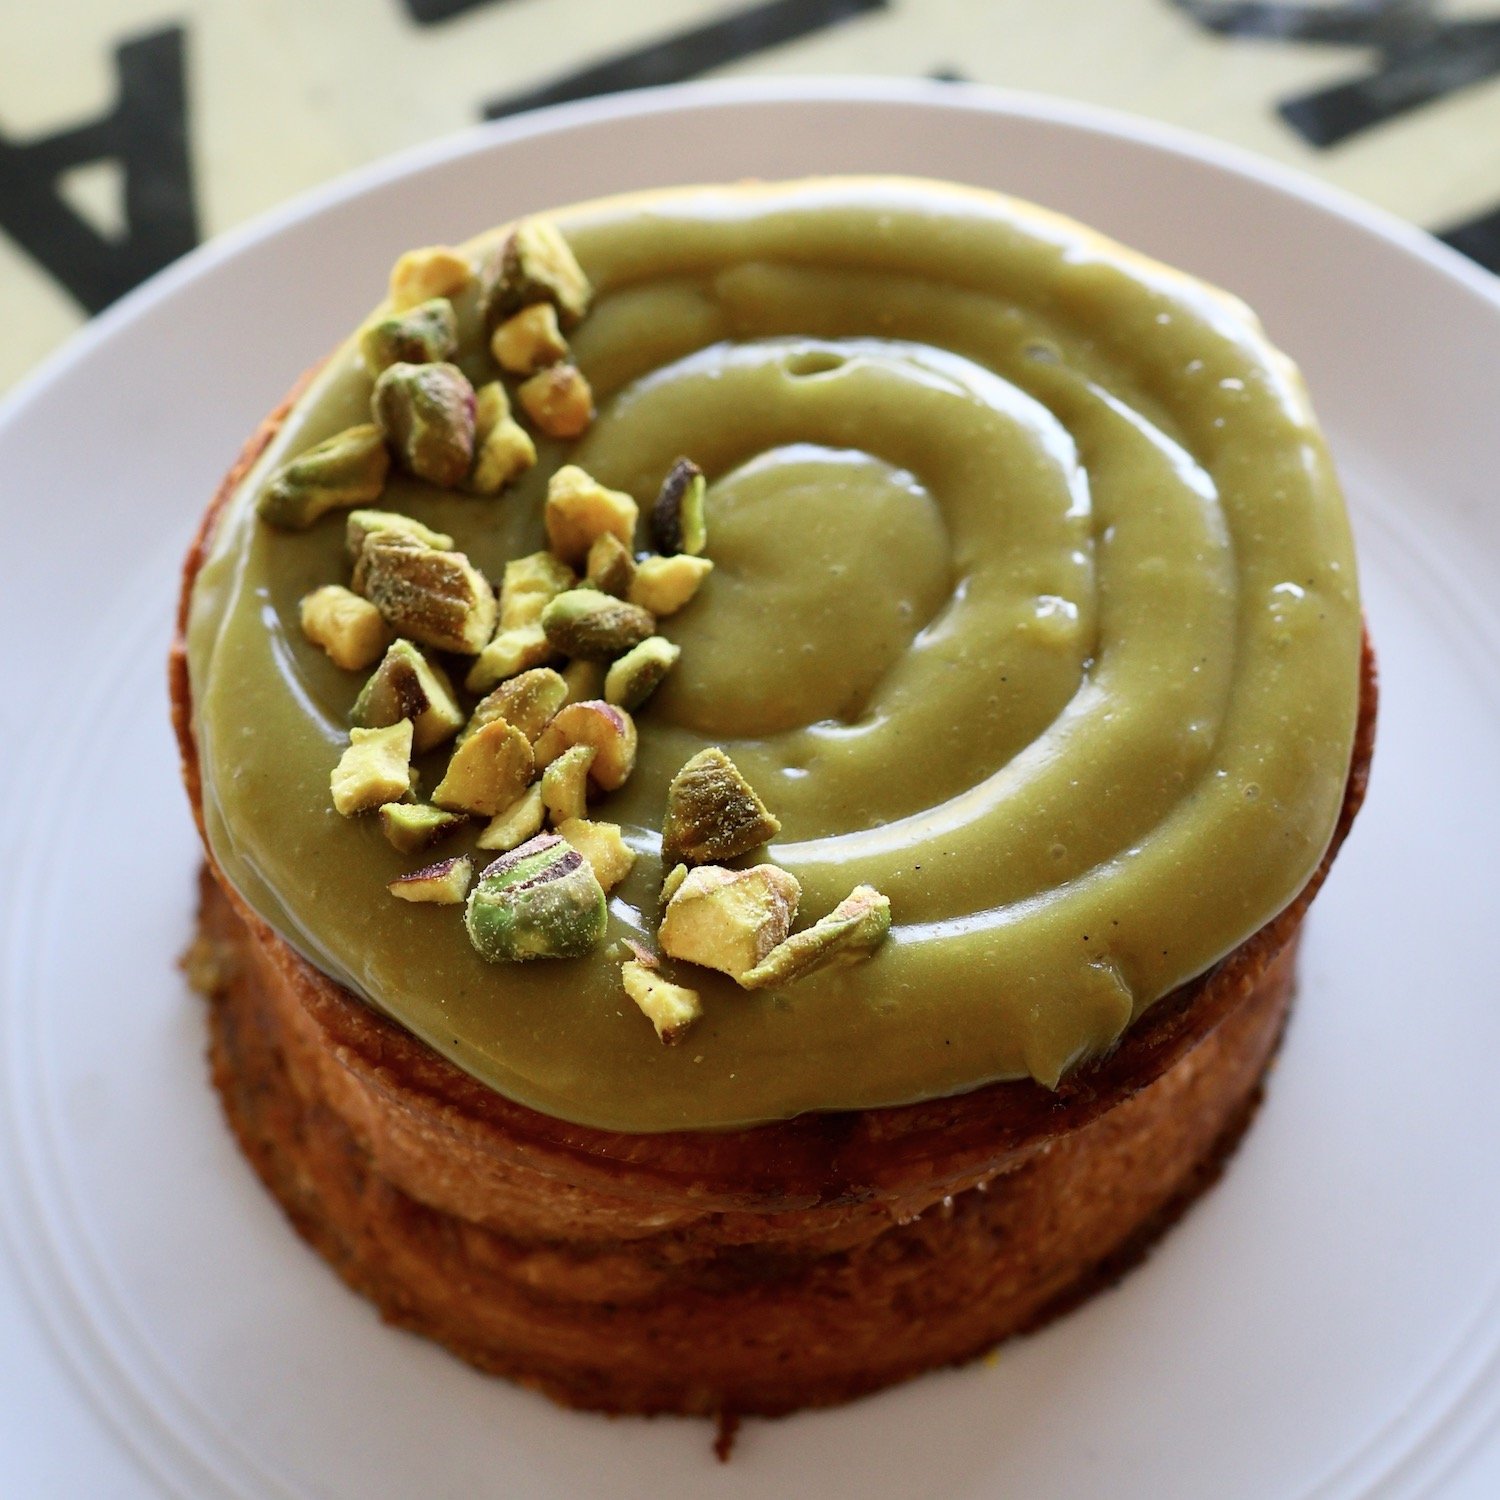 pistachio-scroll-patisserie-bakery-frankies-albury.JPG